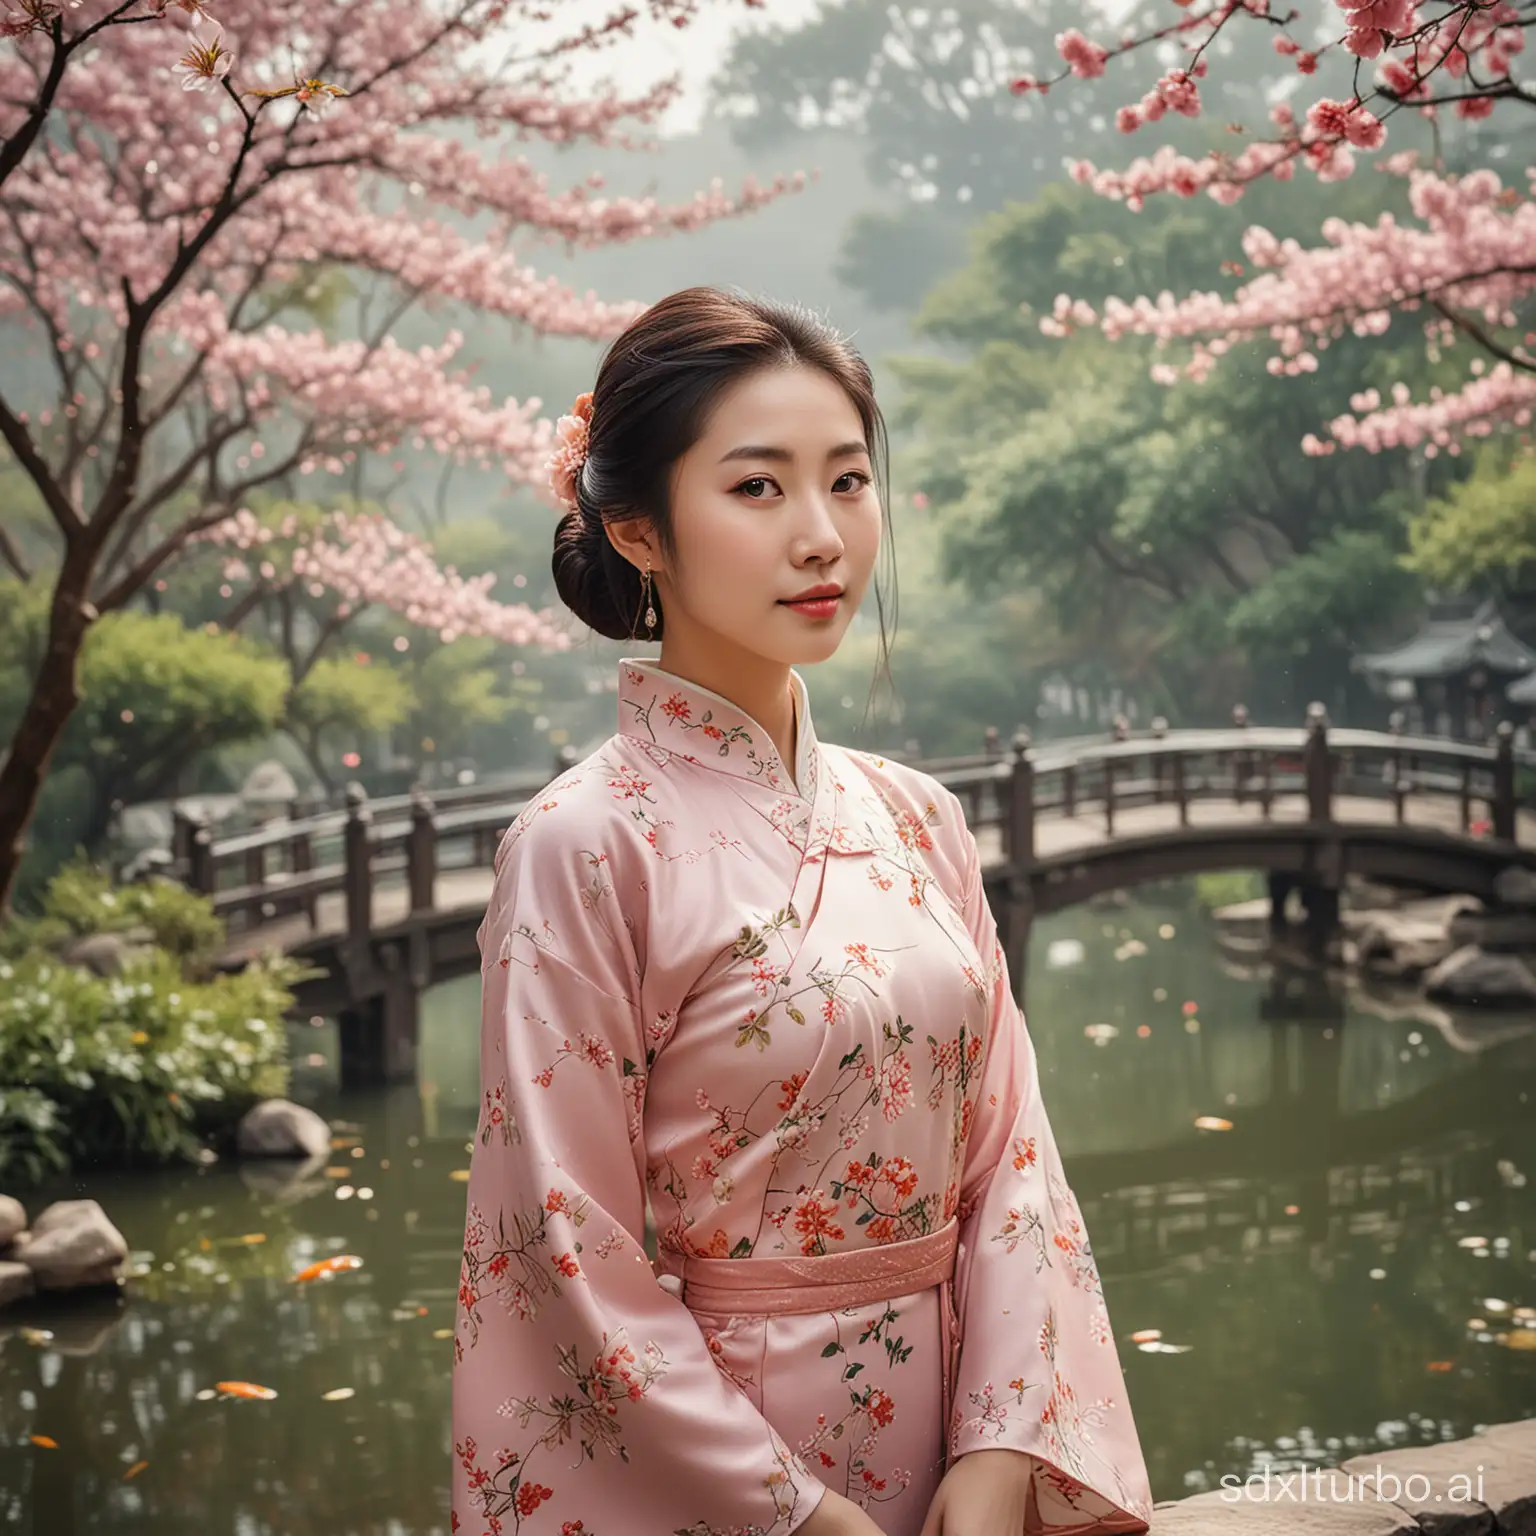 Serene-Chinese-Woman-in-Cheongsam-Dress-in-Traditional-Garden-Setting